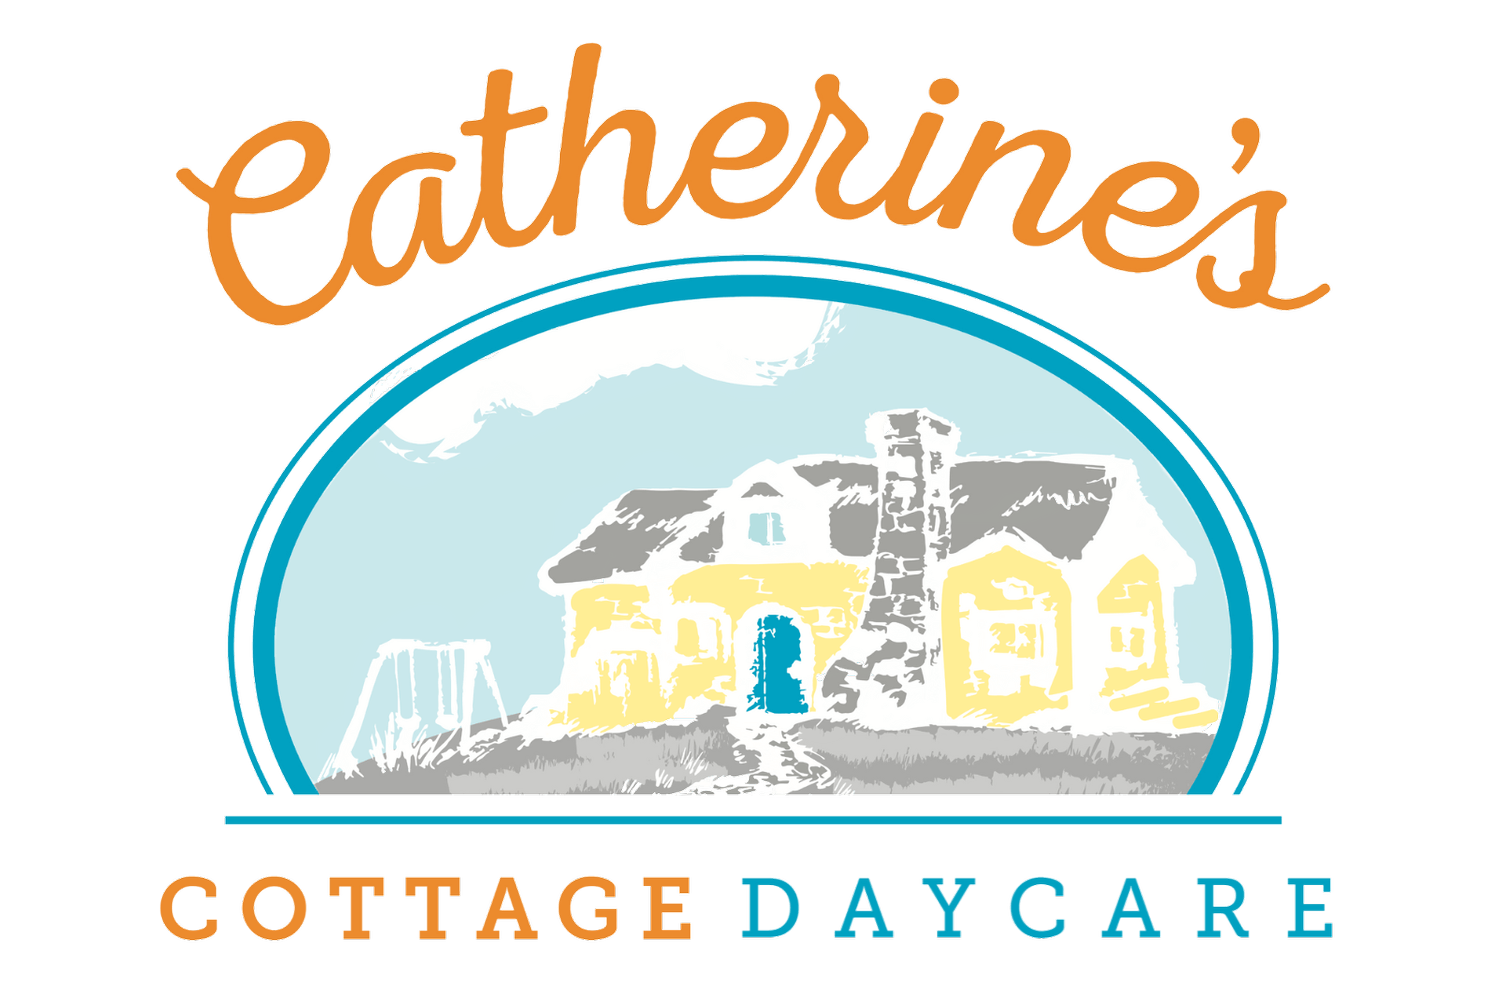 Catherine&#39;s Cottage Daycare